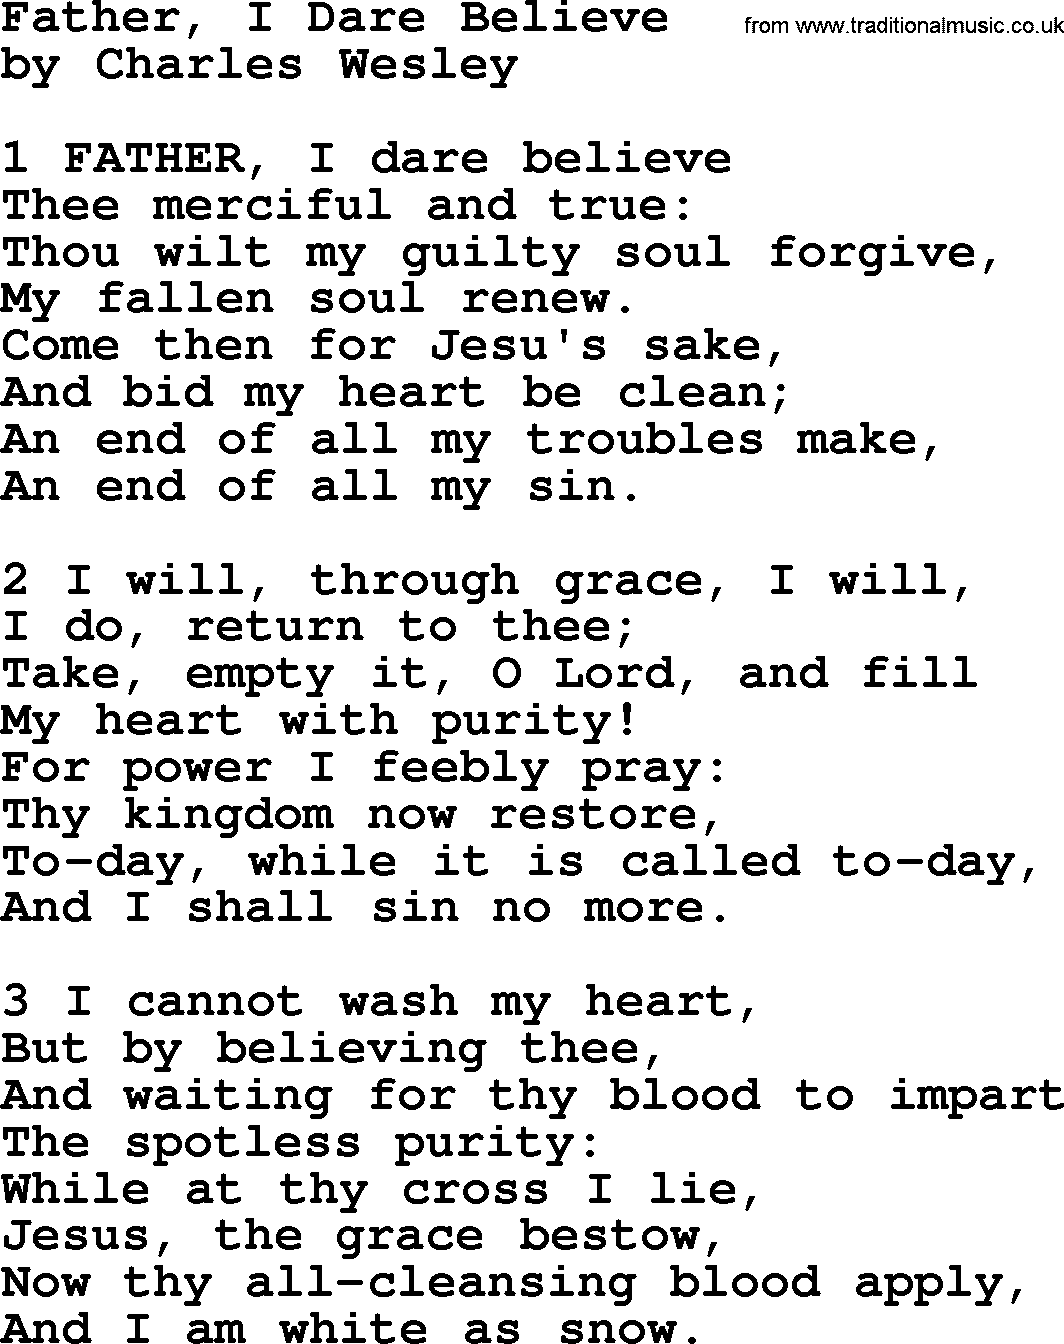 Charles Wesley hymn: Father, I Dare Believe, lyrics